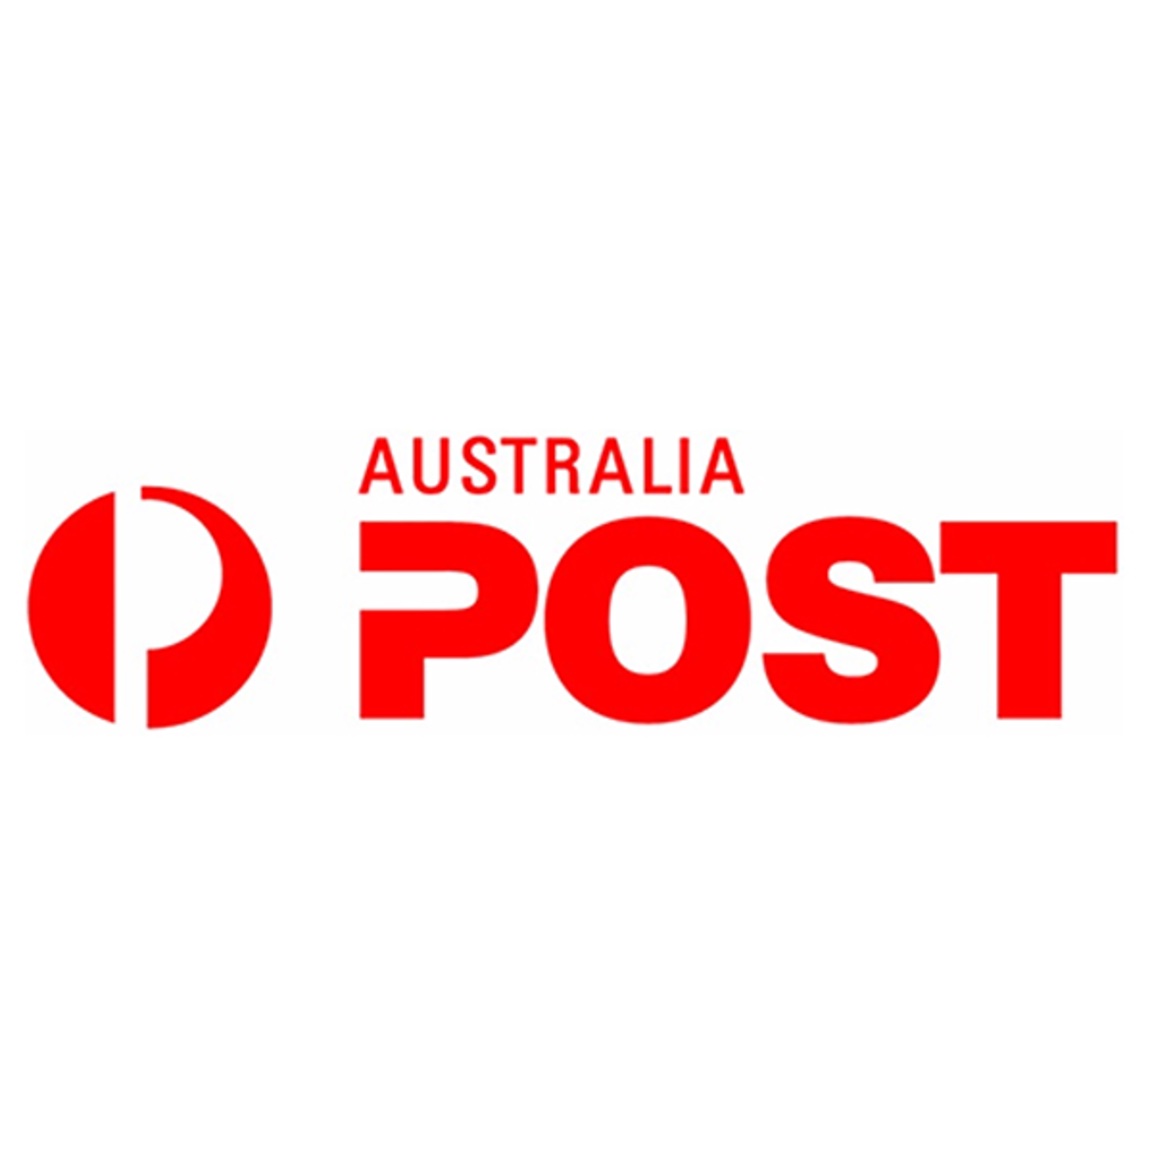 Пост post. Почта Австралии. Логотип пост. Auspost. Australian Post logo.